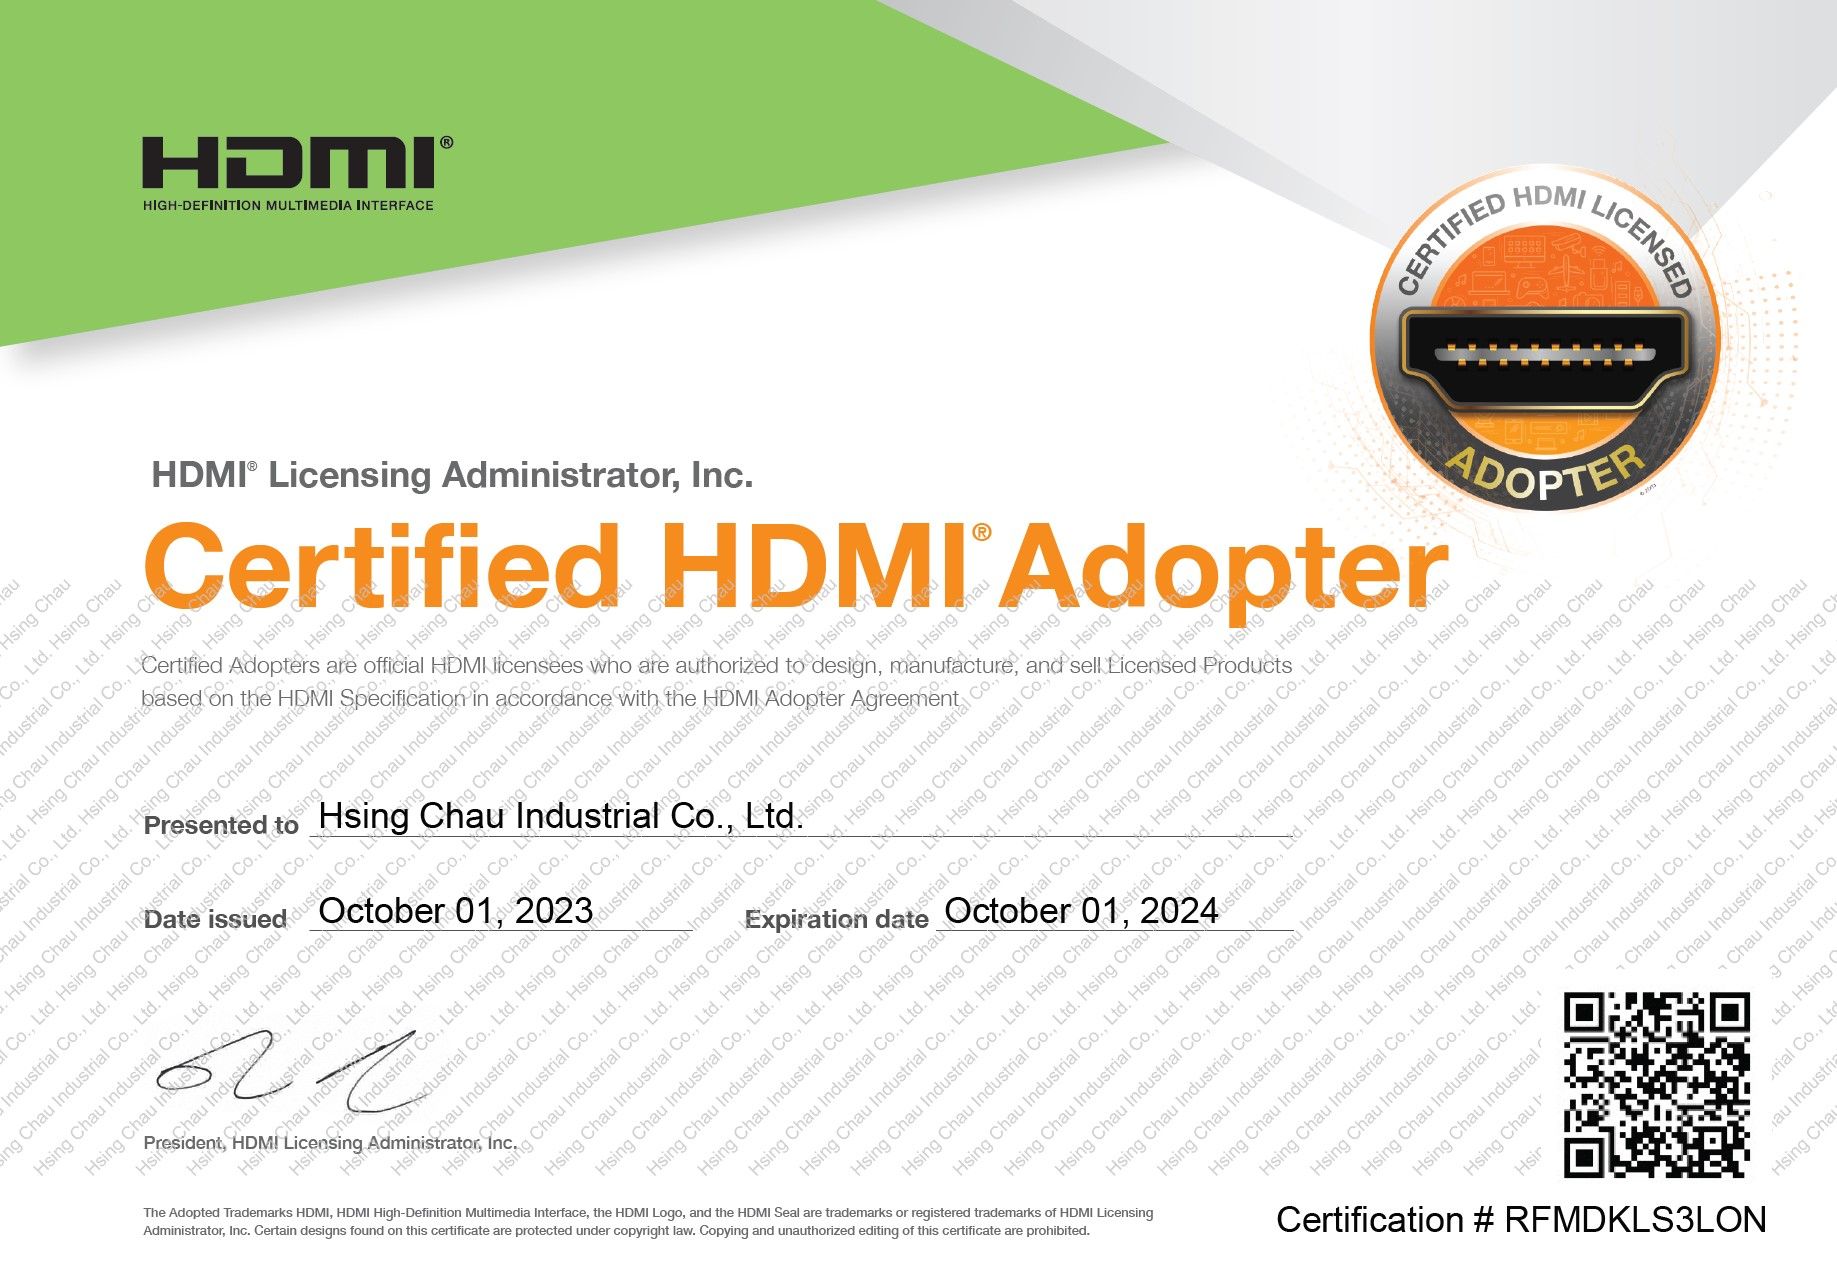 HCI HDMI Adopter License 2023-2024